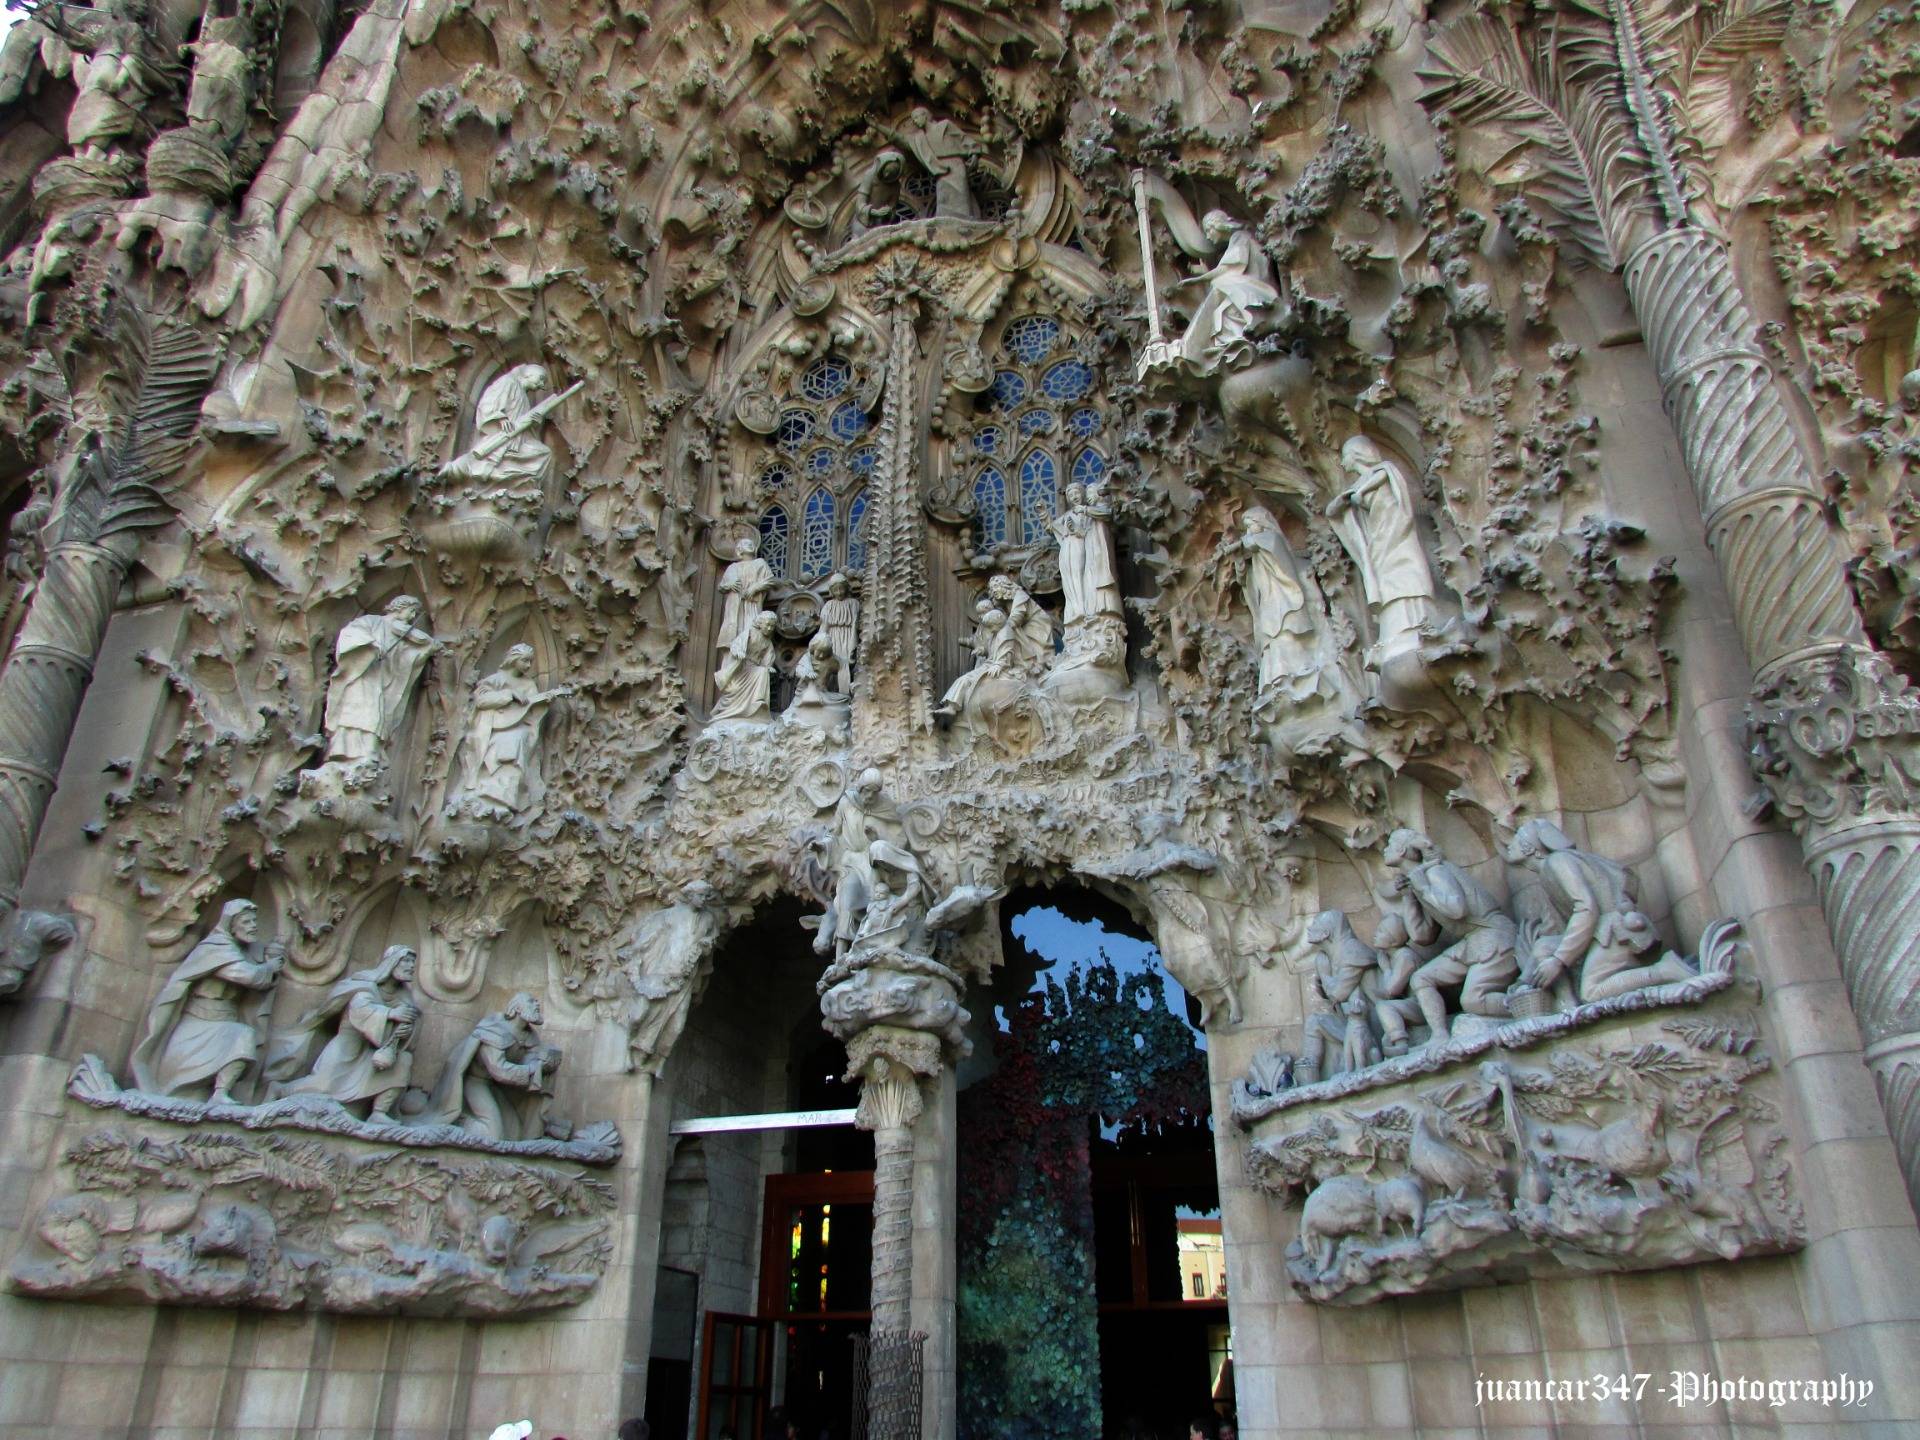 View of the main portal of the Sagrada Familia